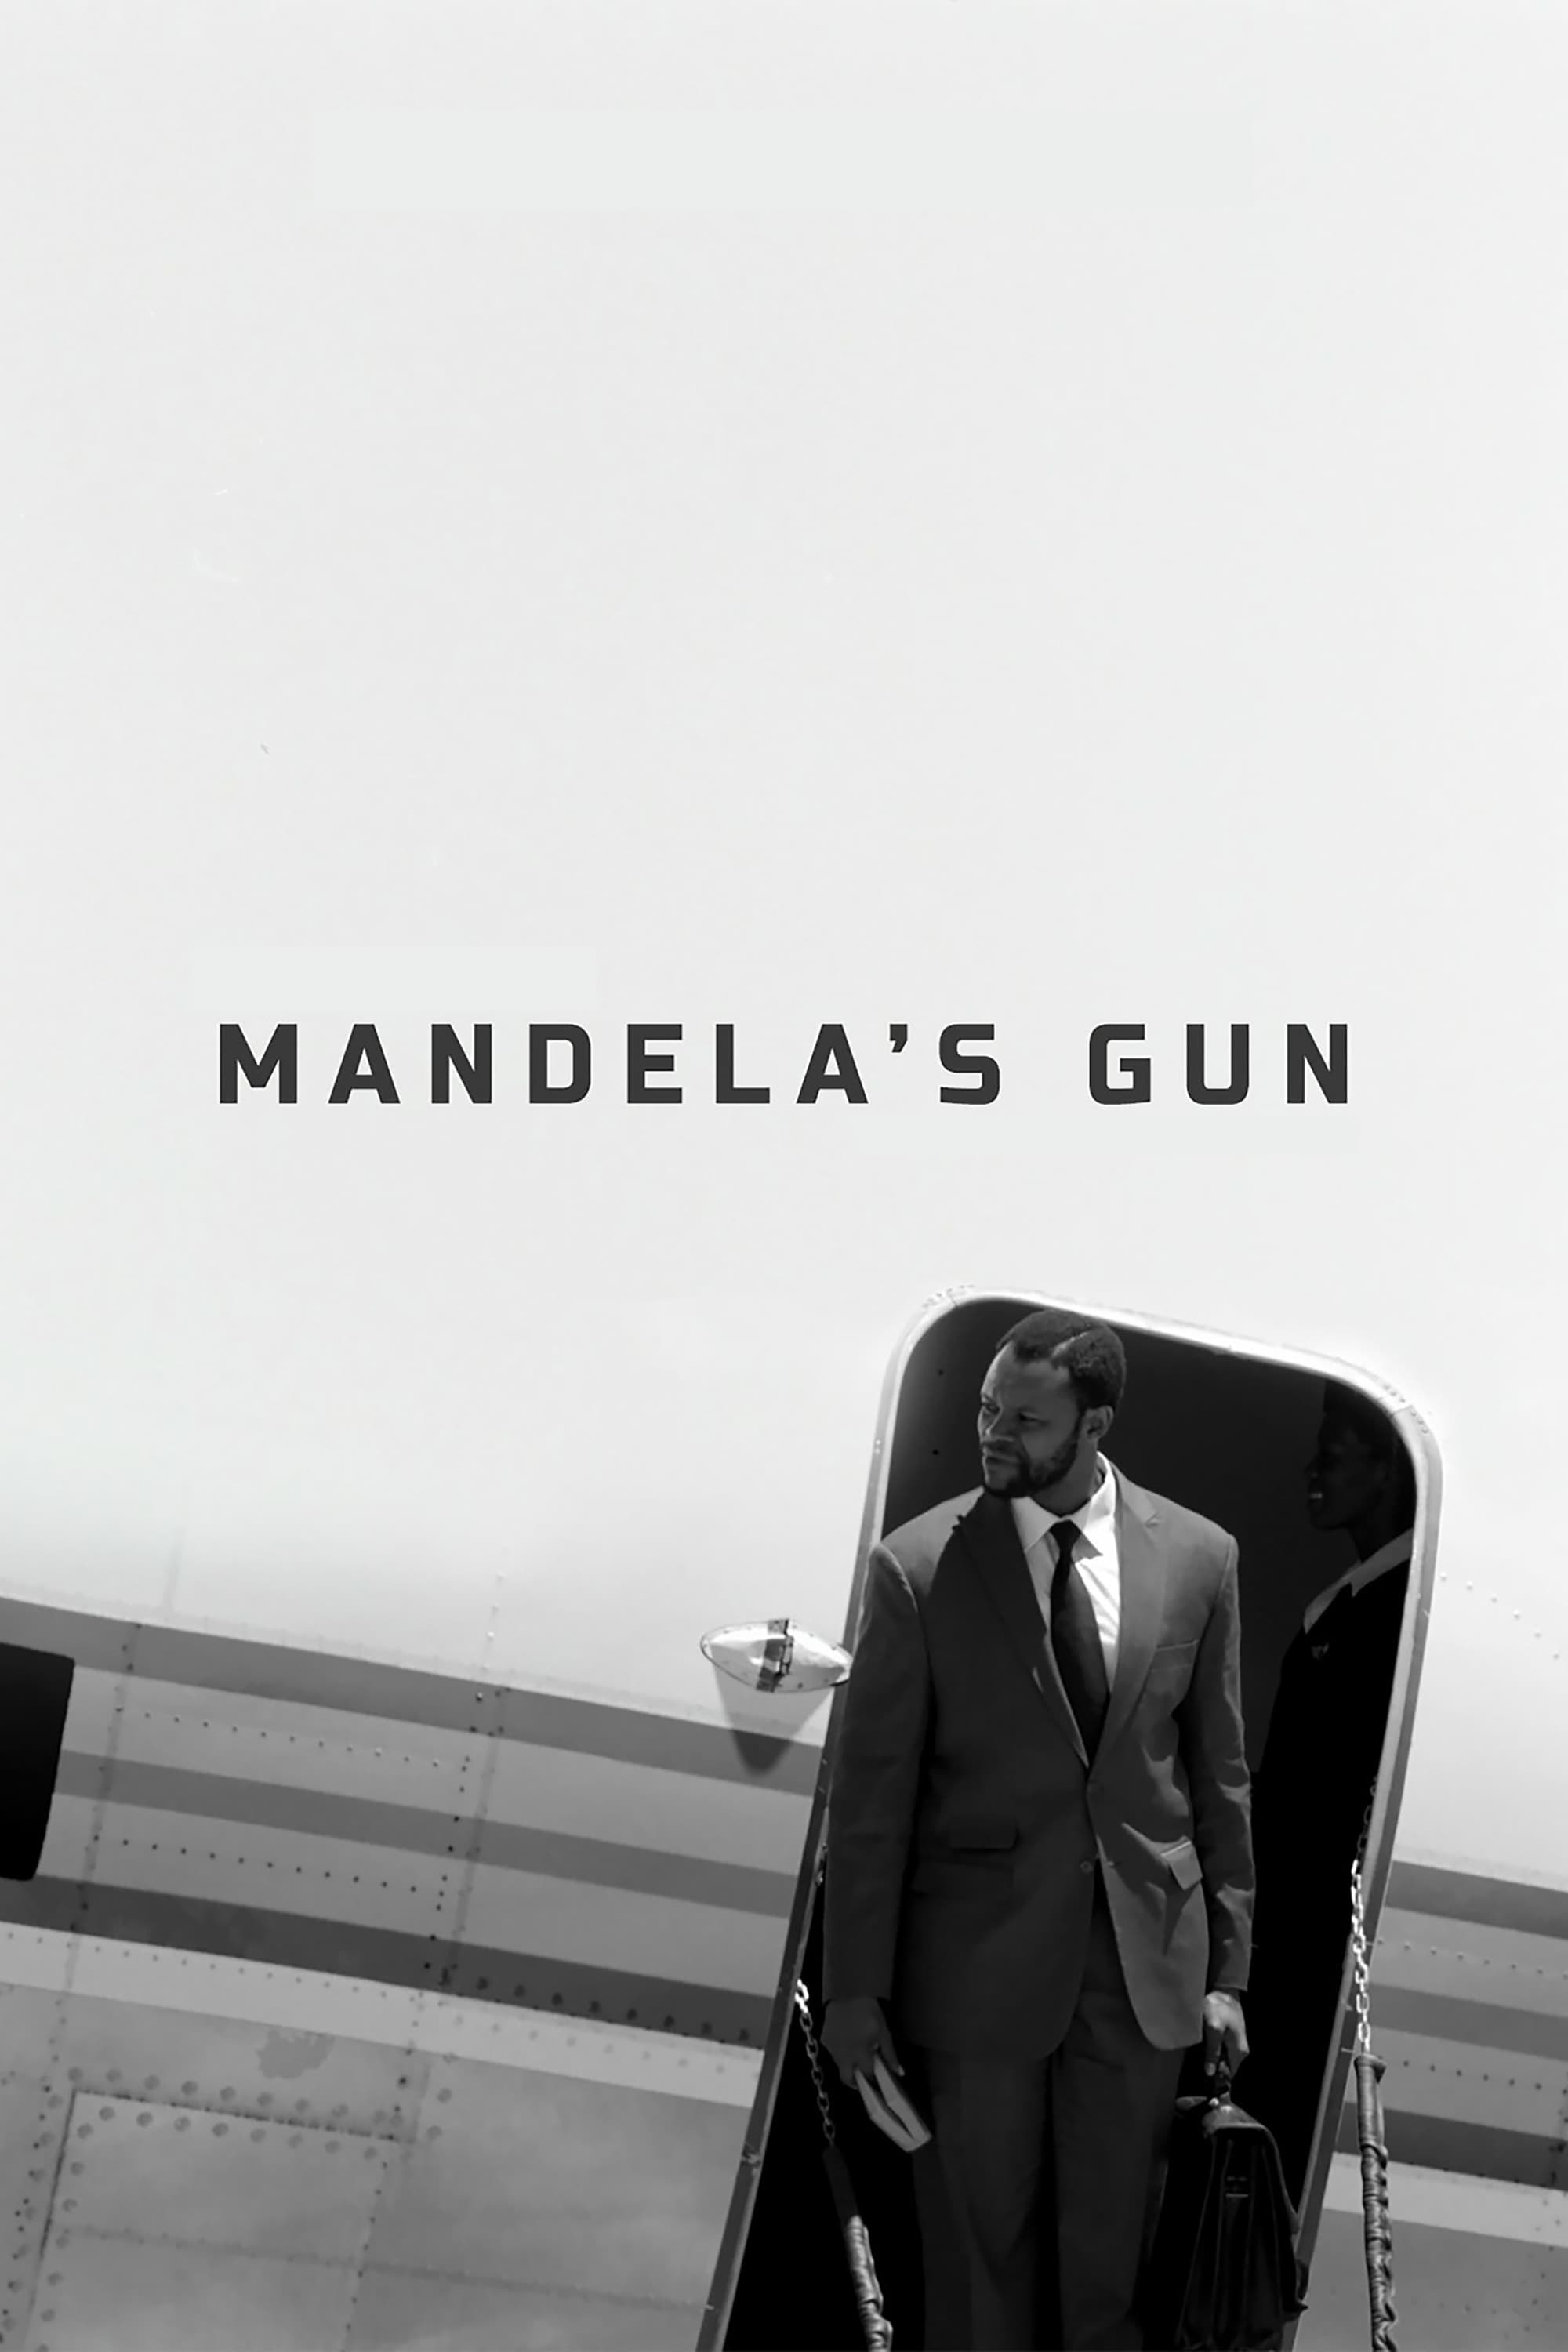 Mandela's Gun